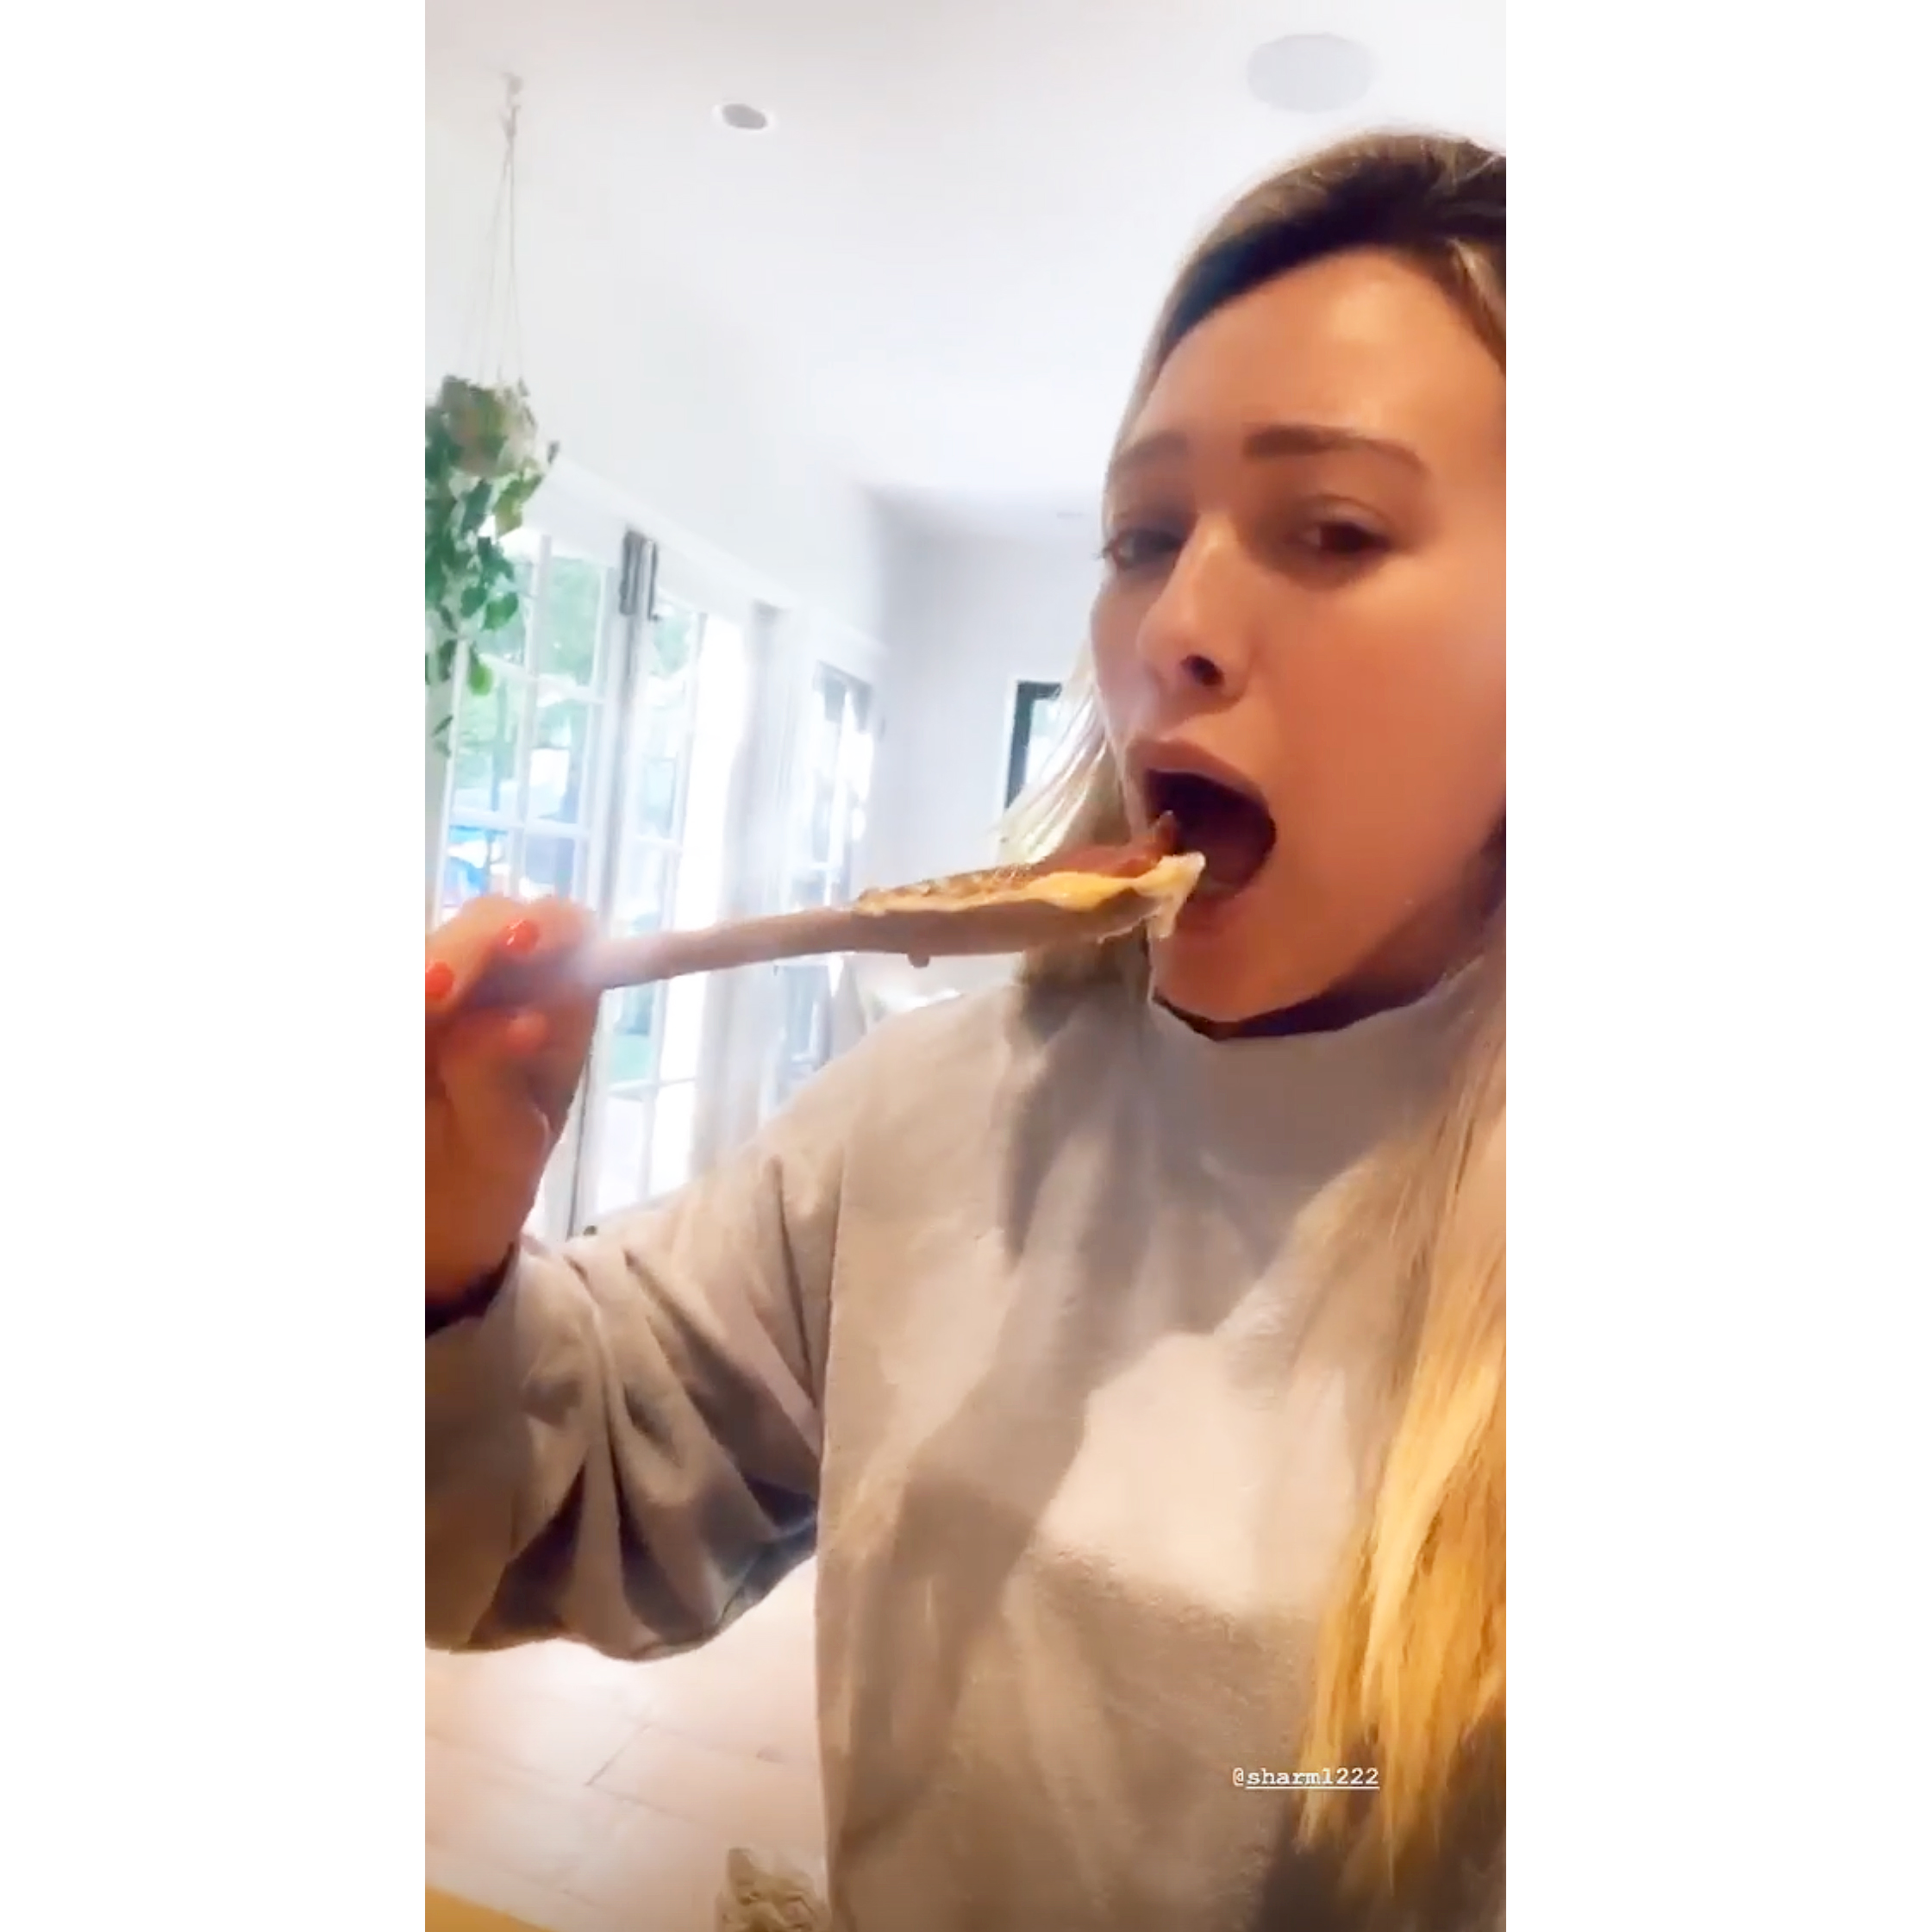 Hilary Duff Plays Disgusting Food Game on Instagram